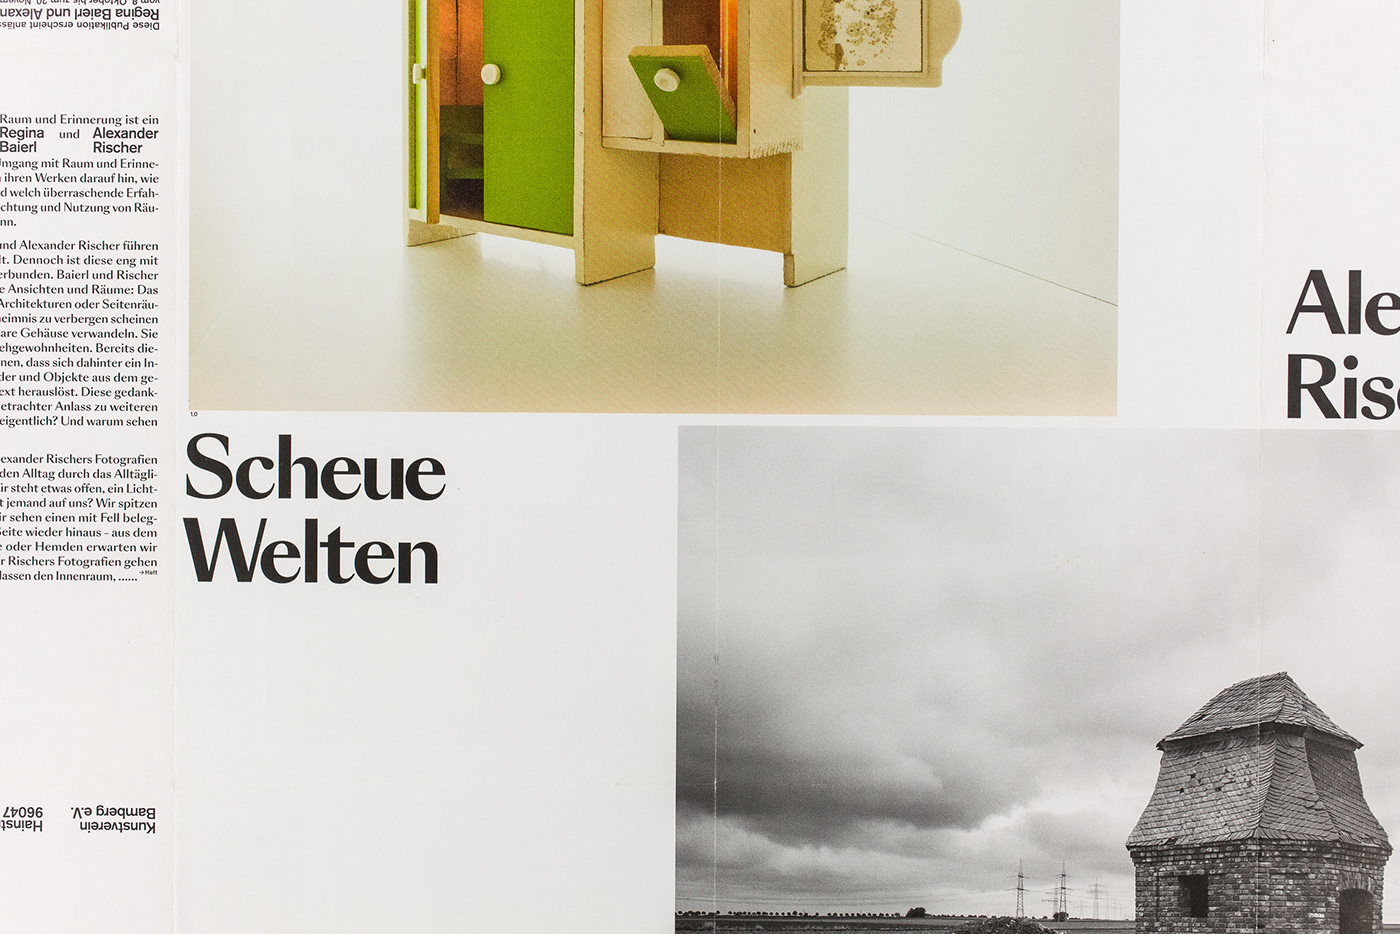 cover design graphic design  typography   Photography  art kunstverein Bamberg